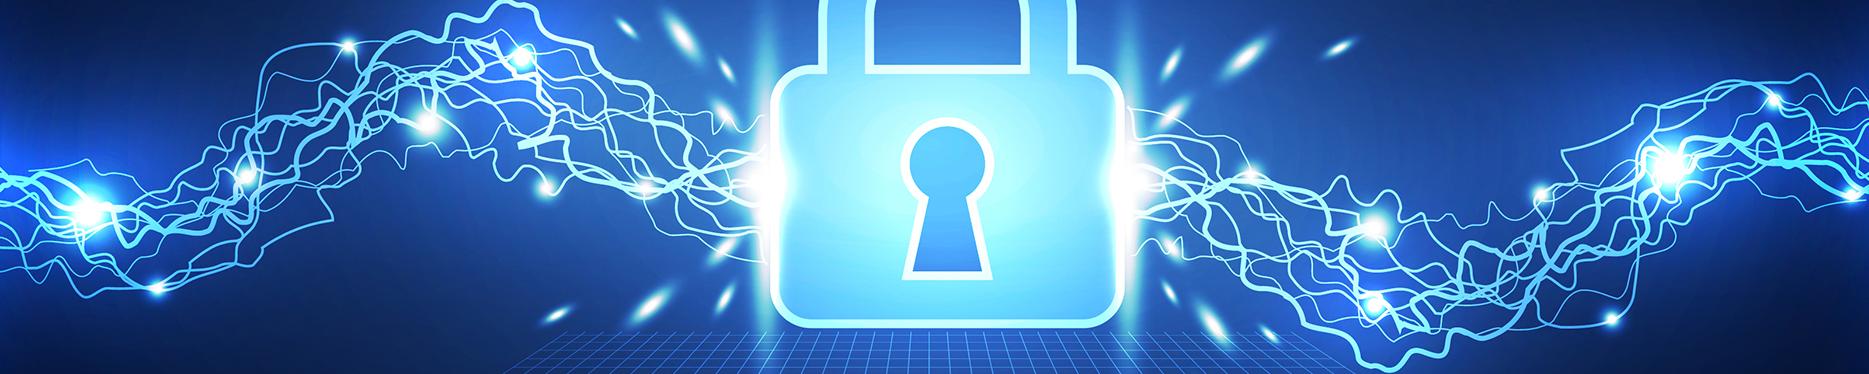 Baltek ICT Solution Provider - Risiko Cyber Angriffe